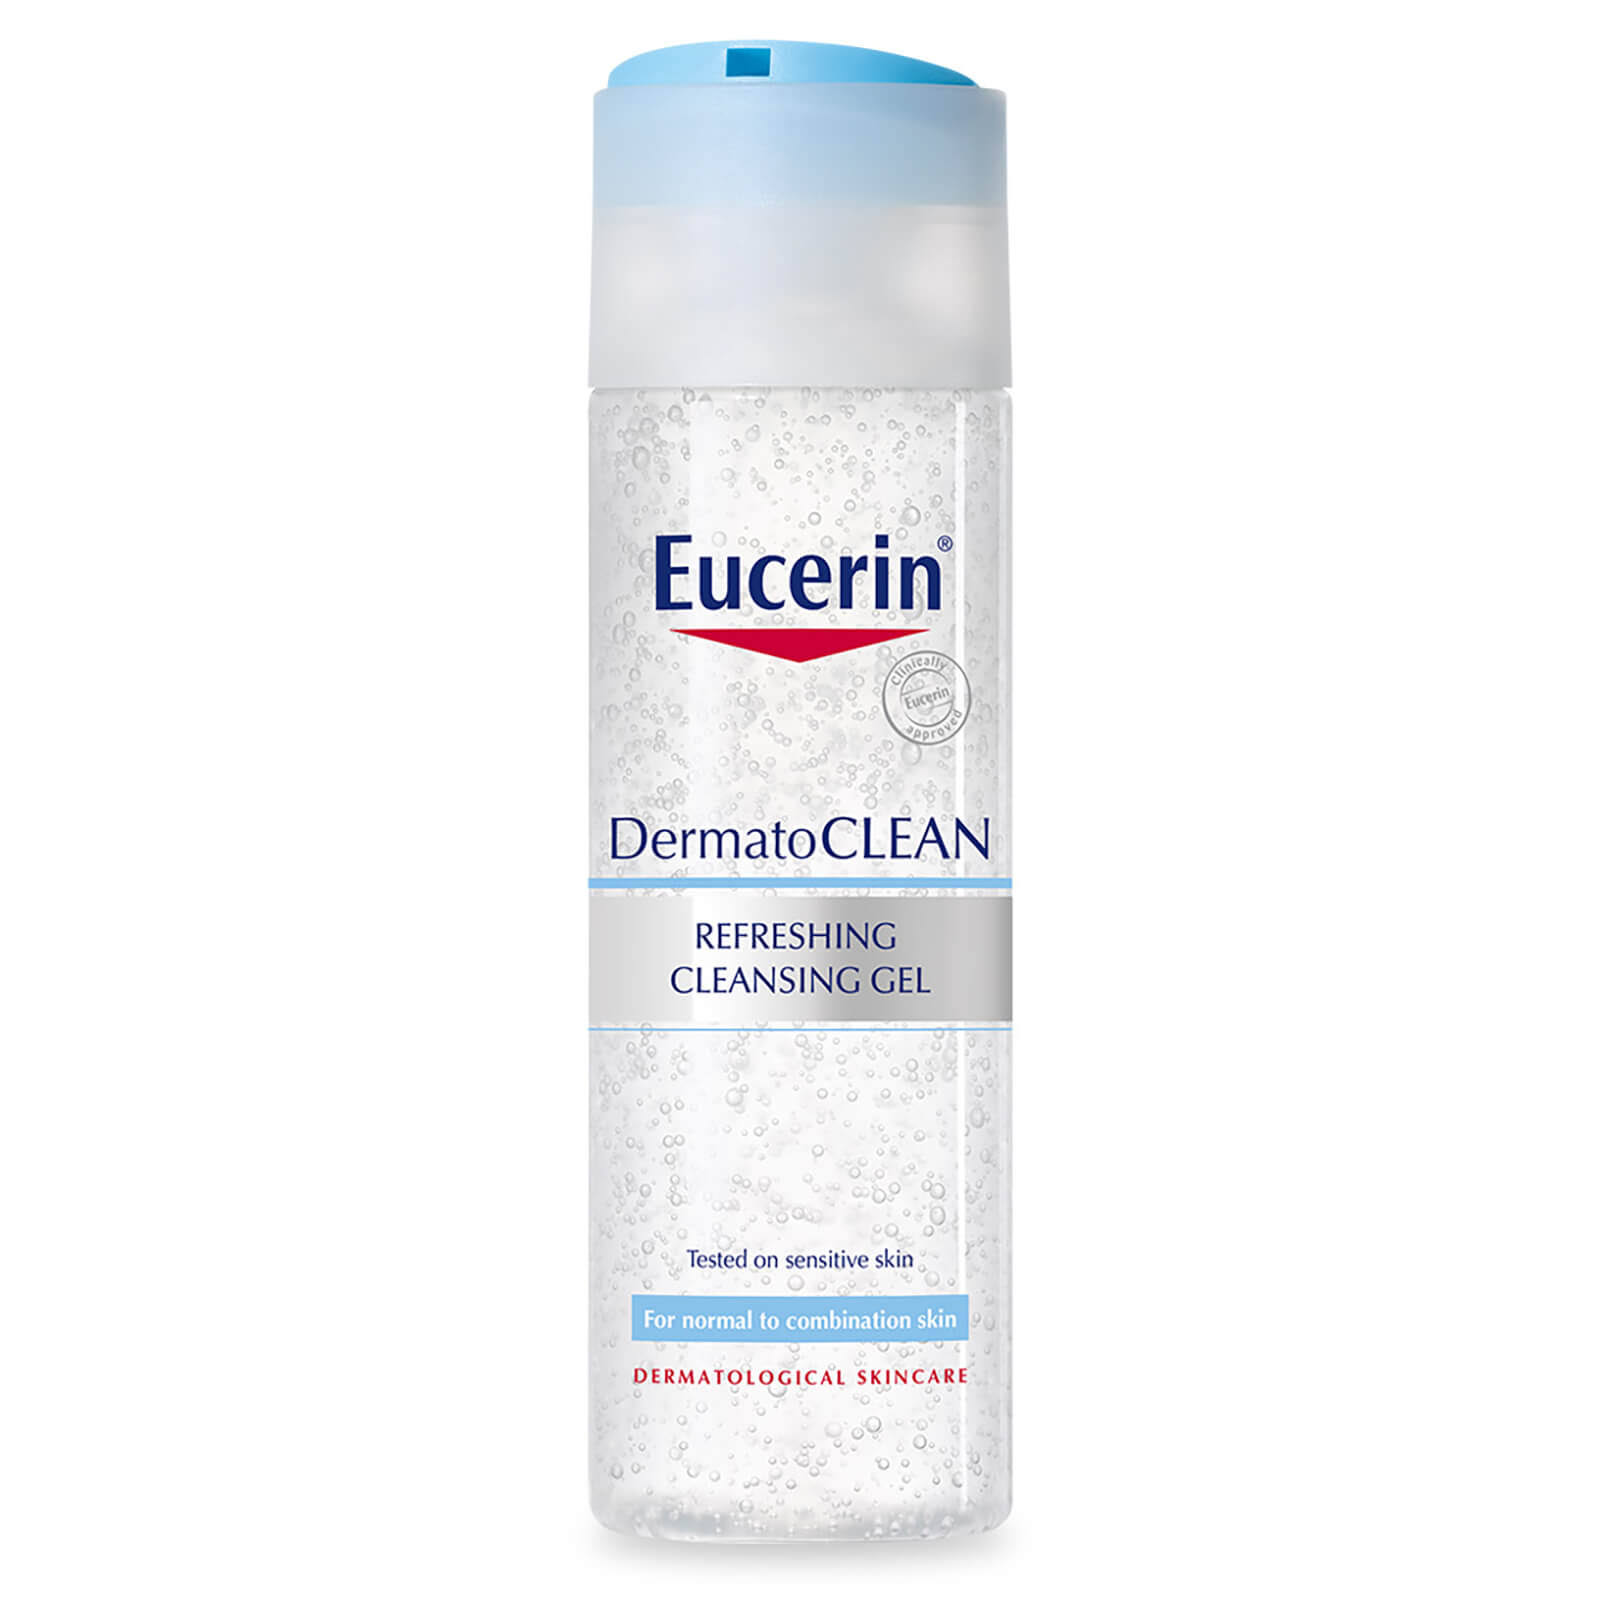 Eucerin Dermatoclean Refreshing Cleansing Gel - 200ml